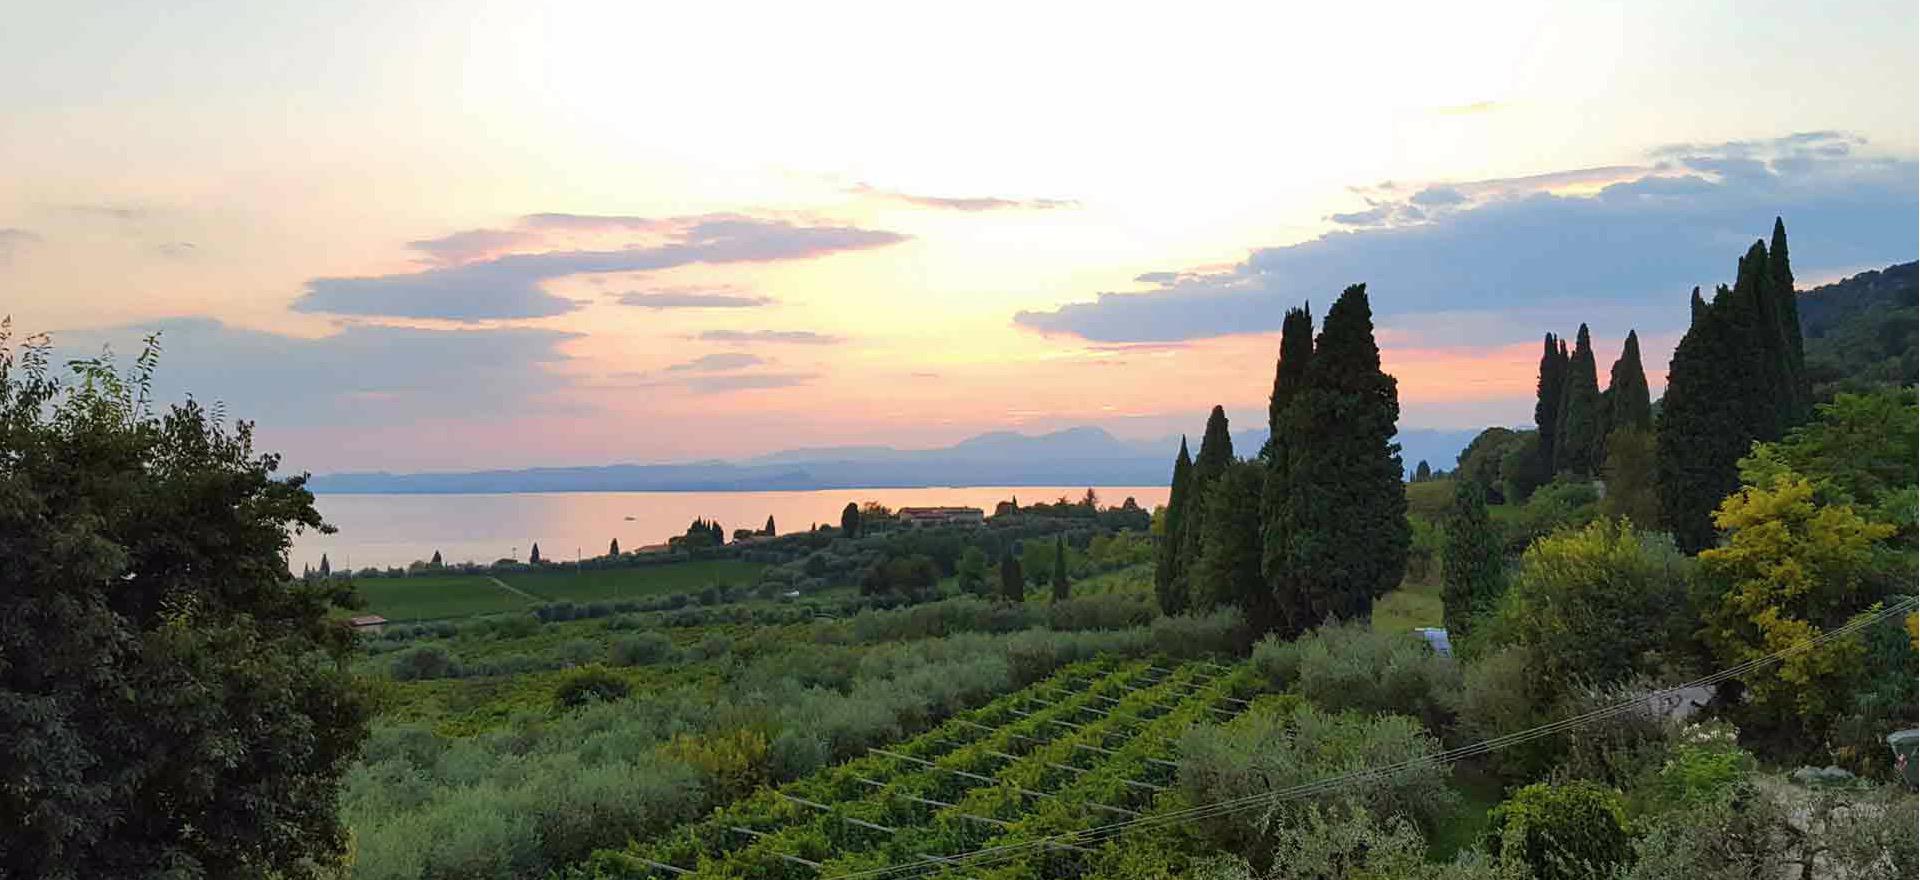 Agriturismo Lake Como and Lake Garda Charming agriturismo with a view of Lake Garda